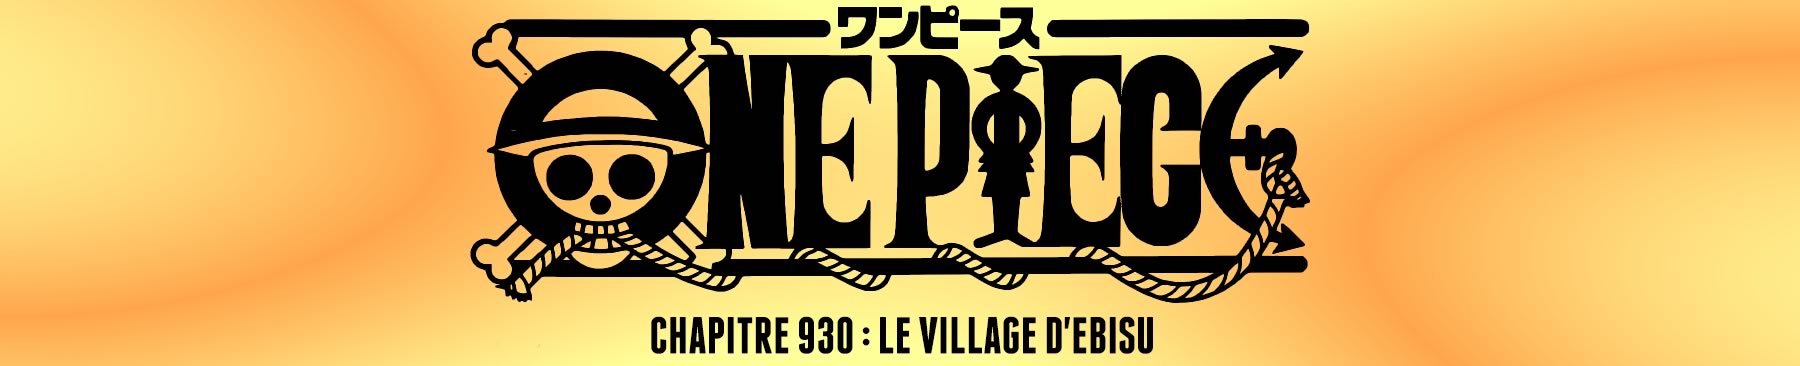 One Piece 930 Chapitre Zoom News Blue One Piece Univers